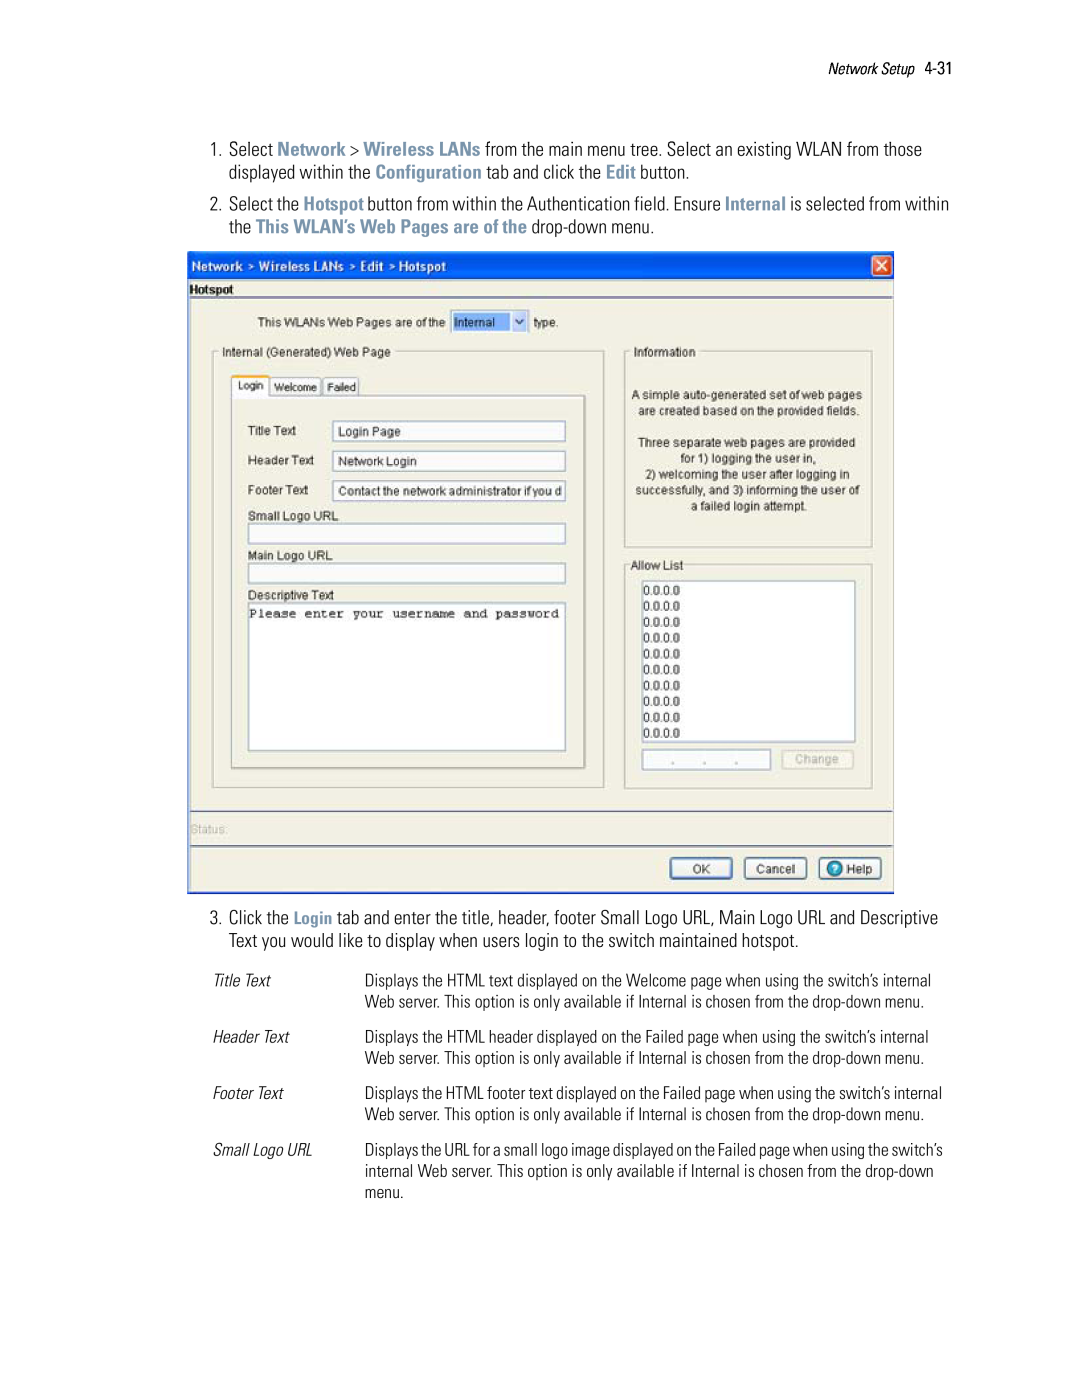 Motorola WS5100 manual Title Text, Header Text, Footer Text, Small Logo URL, menu, Network Setup 